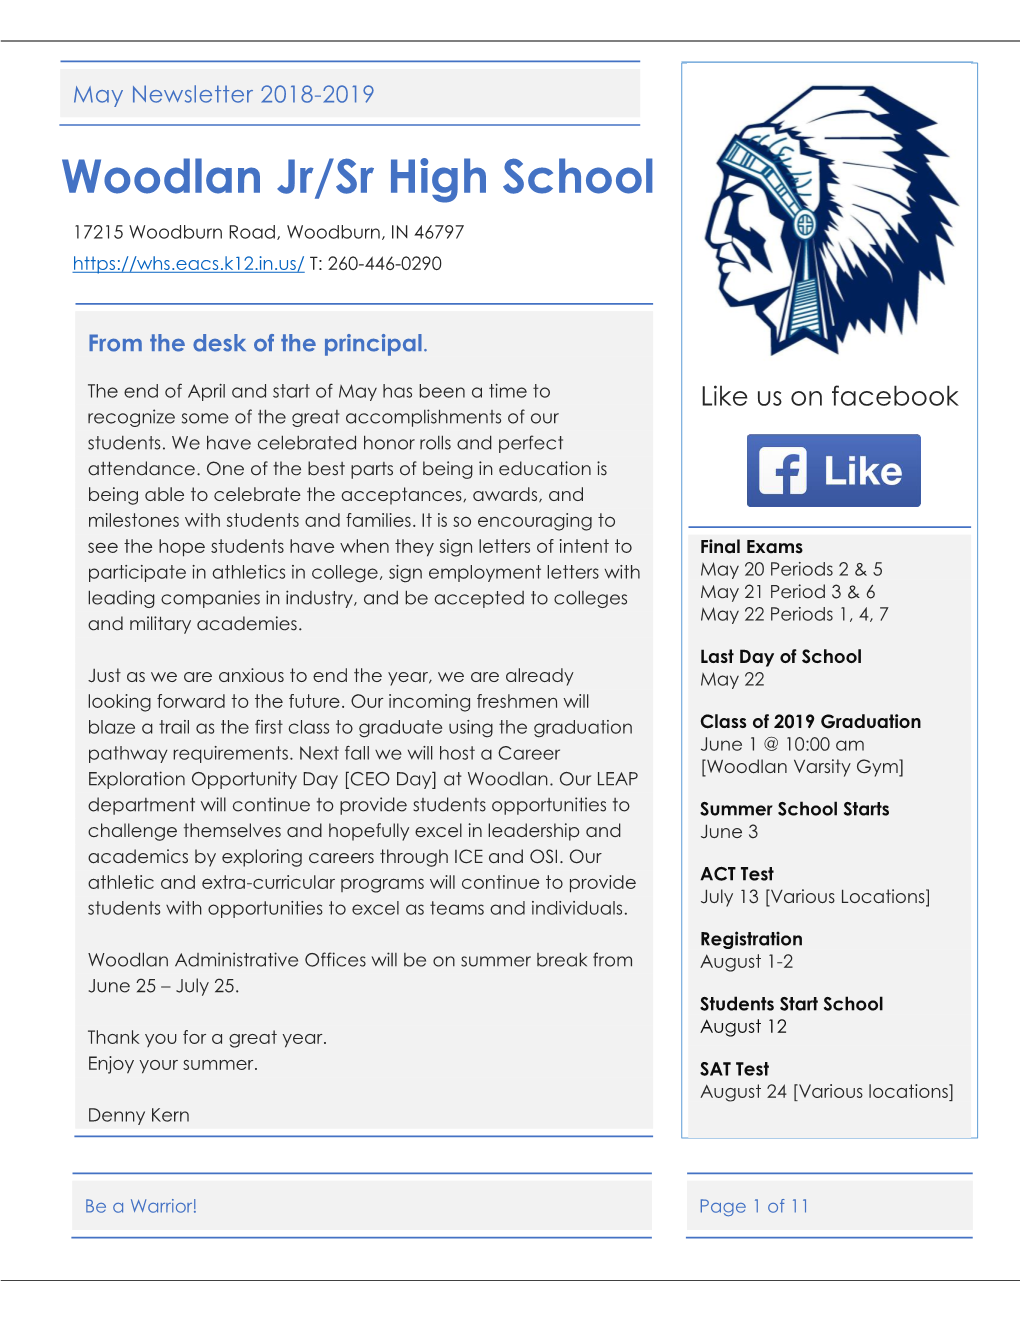 Woodlan Athletic News